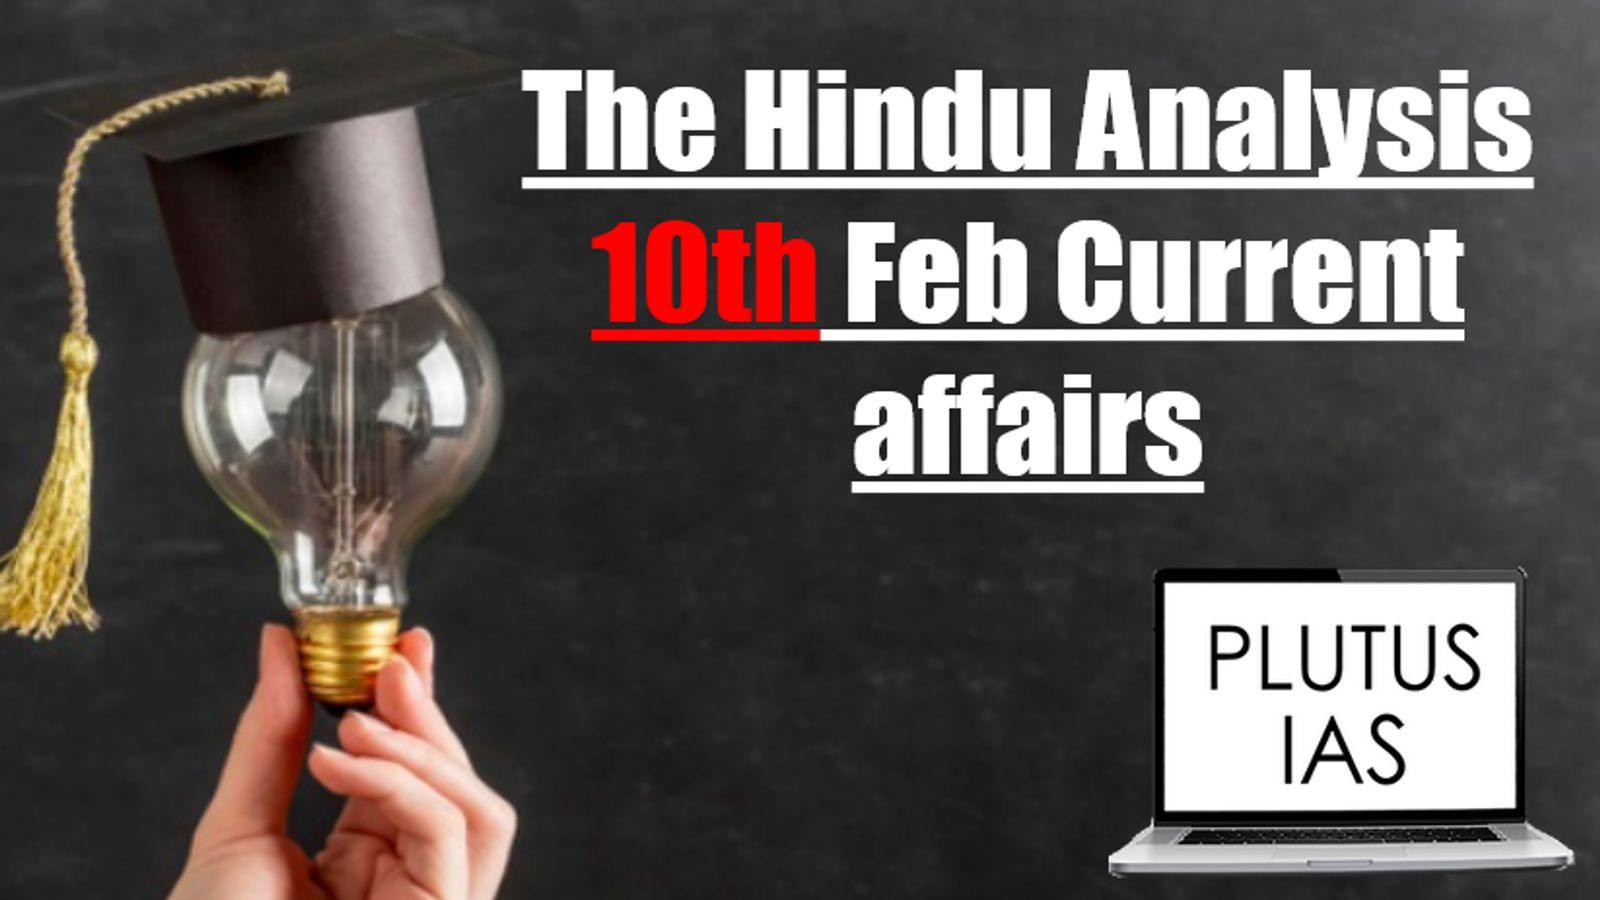 The Hindu Analysis 10th February